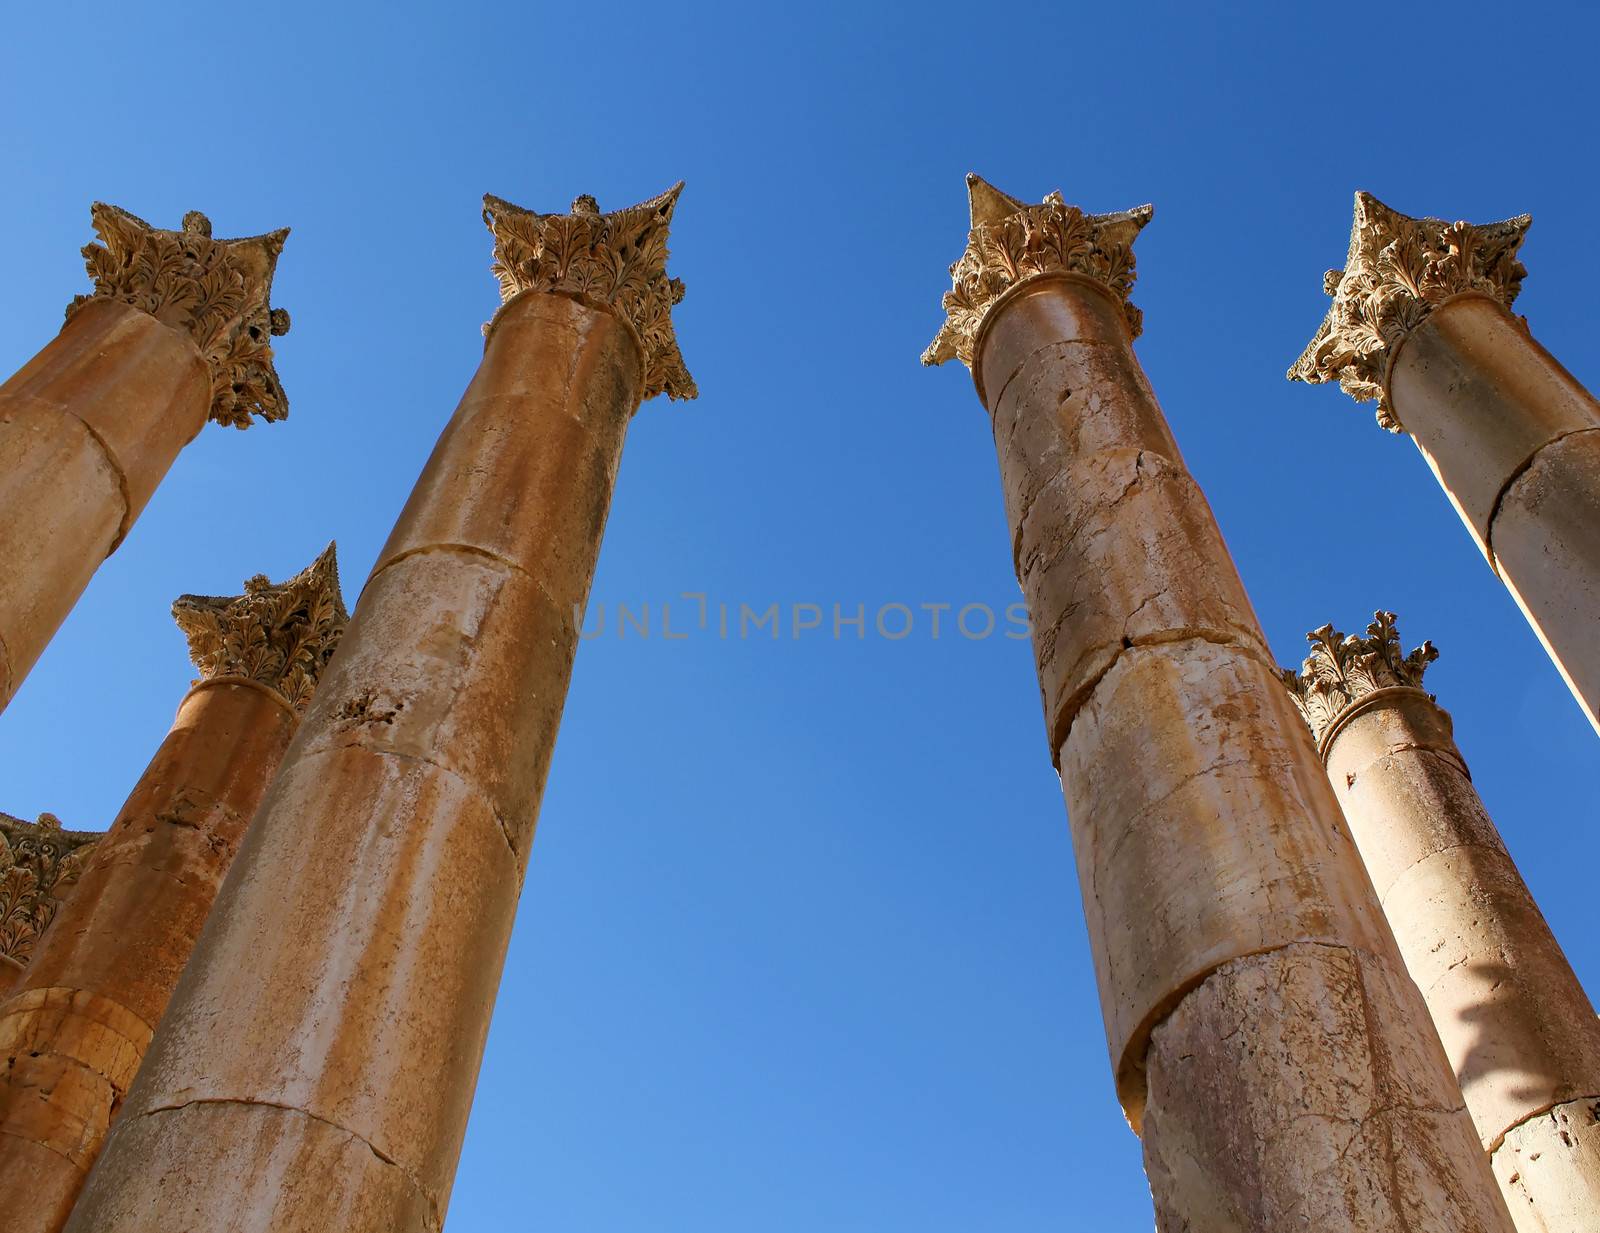 Columms in the Artemis Temple. Ruins of the Greco-Roman city of Gerasa. Ancient Jerash, in Jordan.